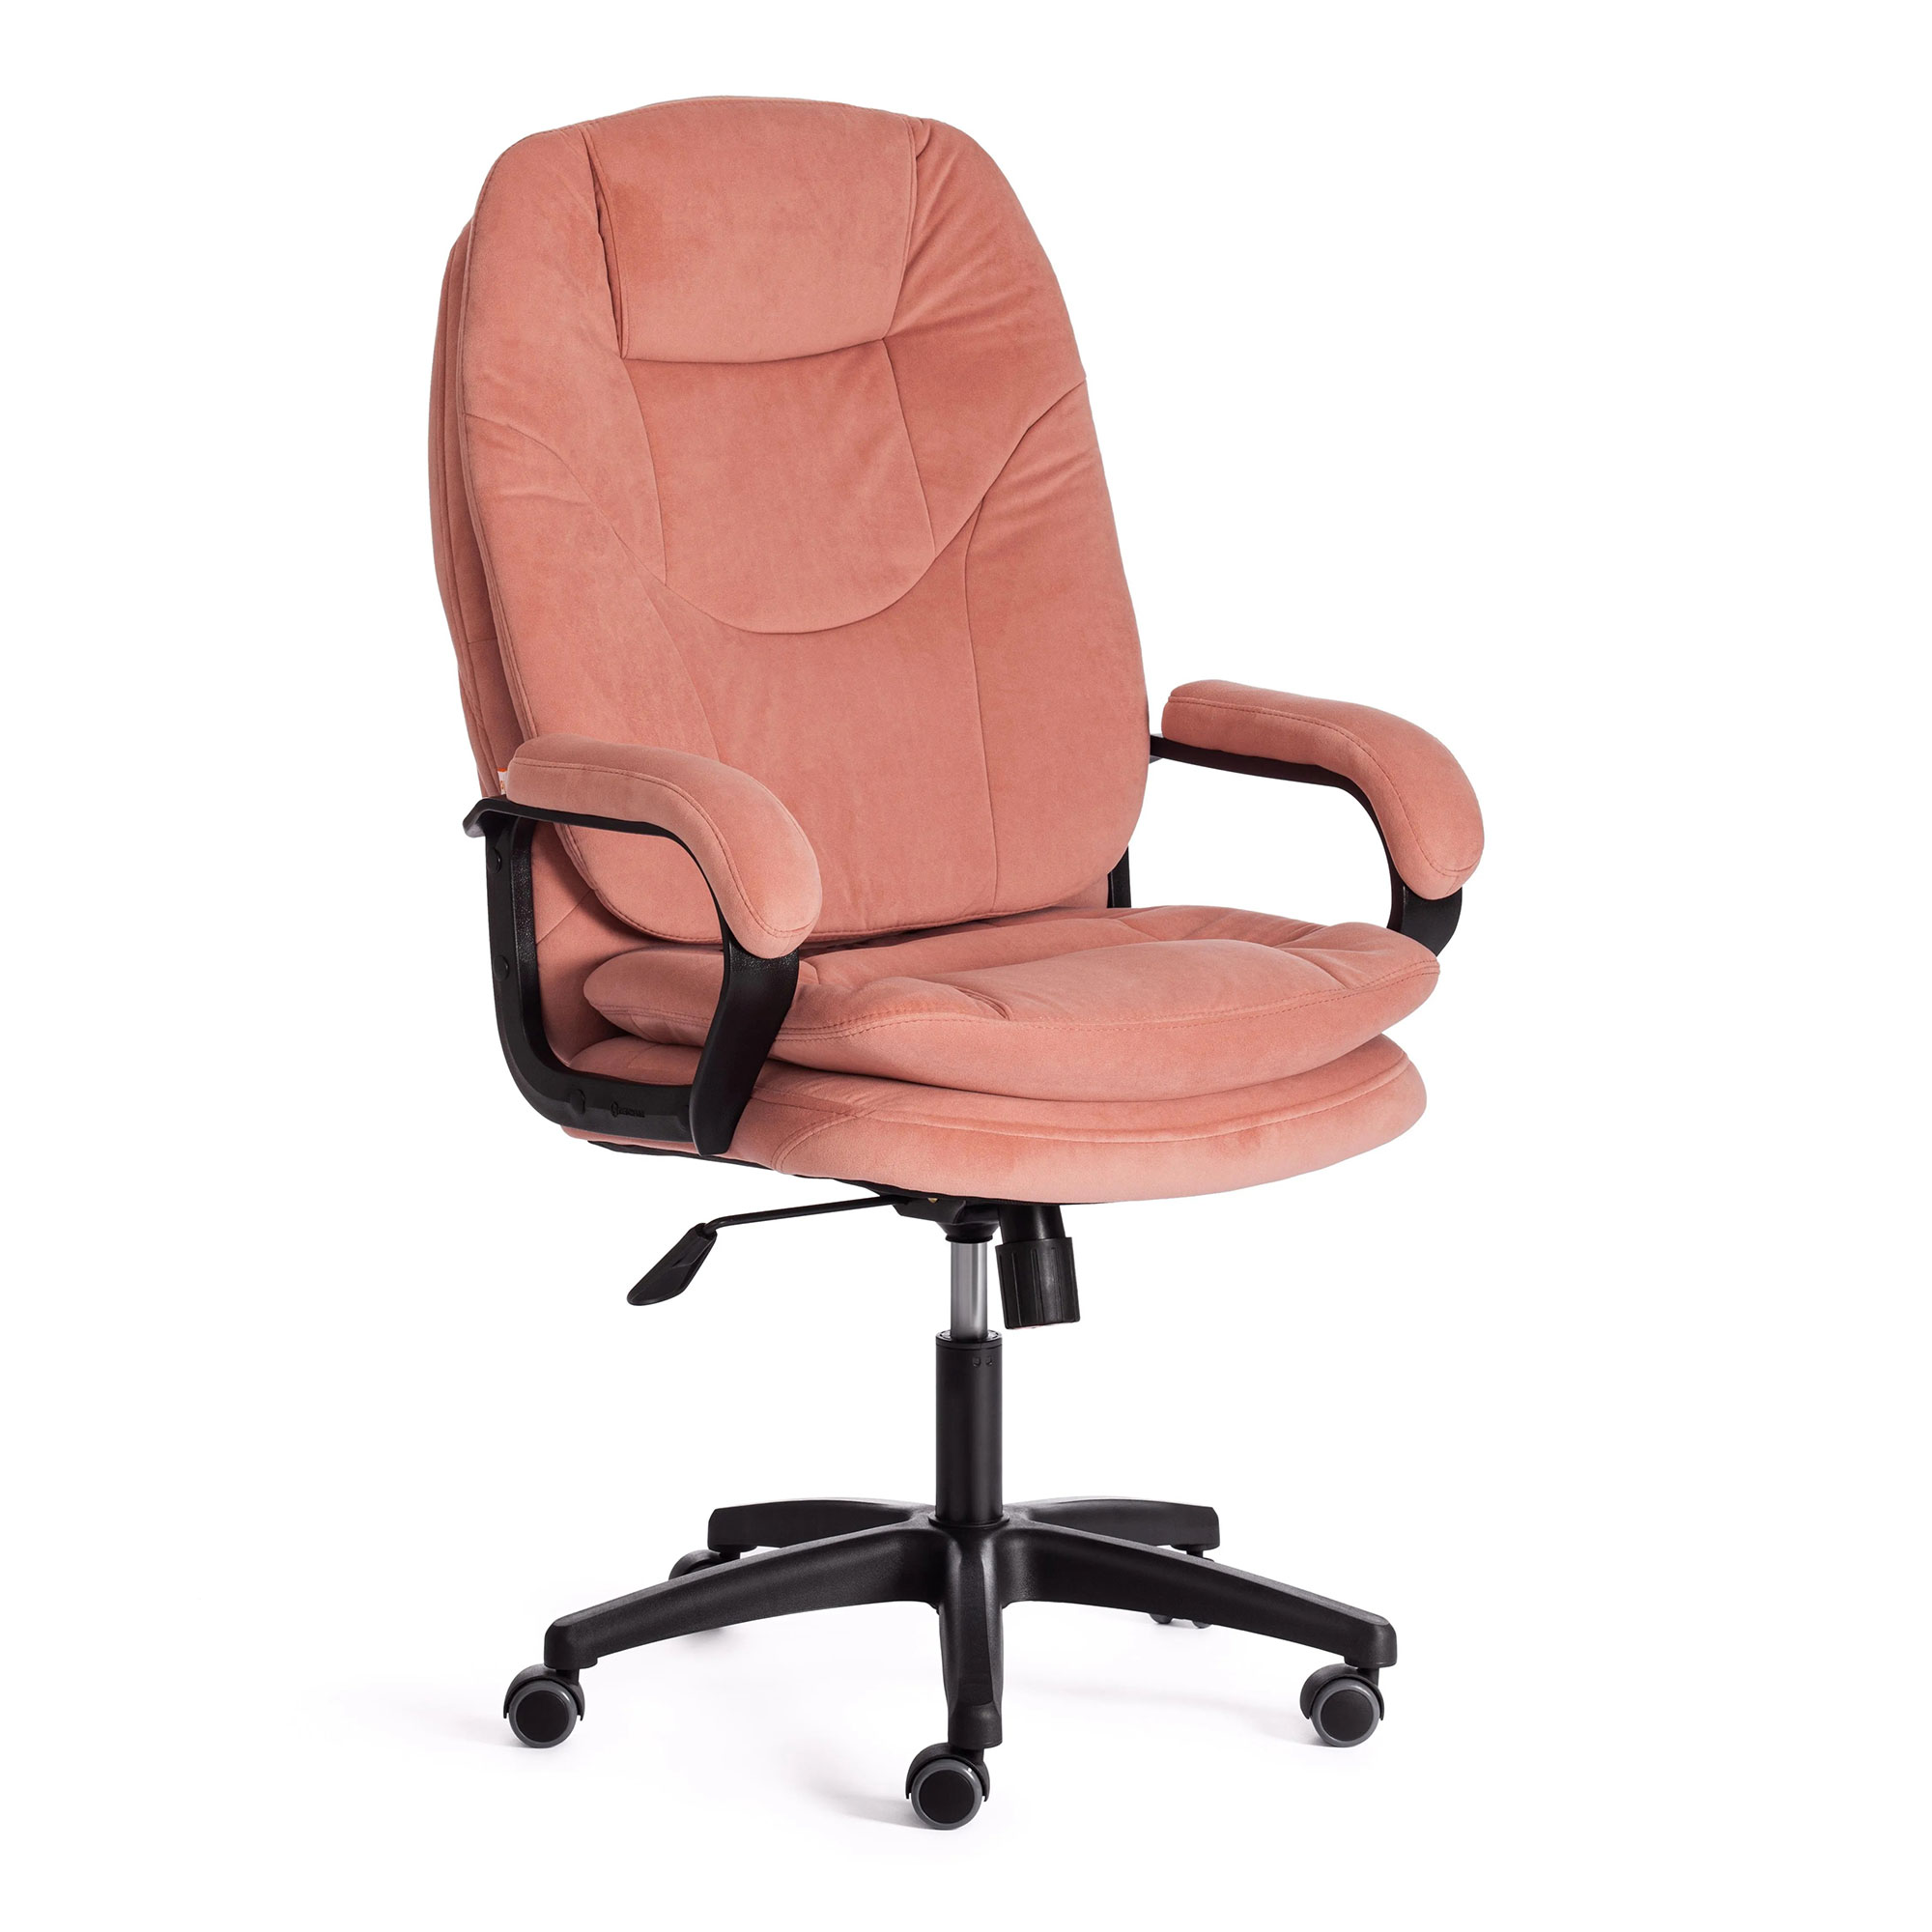 Компьютерное кресло TC Comfort розовое 66х46х133 см (19385) компьютерное кресло tc comfort синее 66х46х133 см 19387